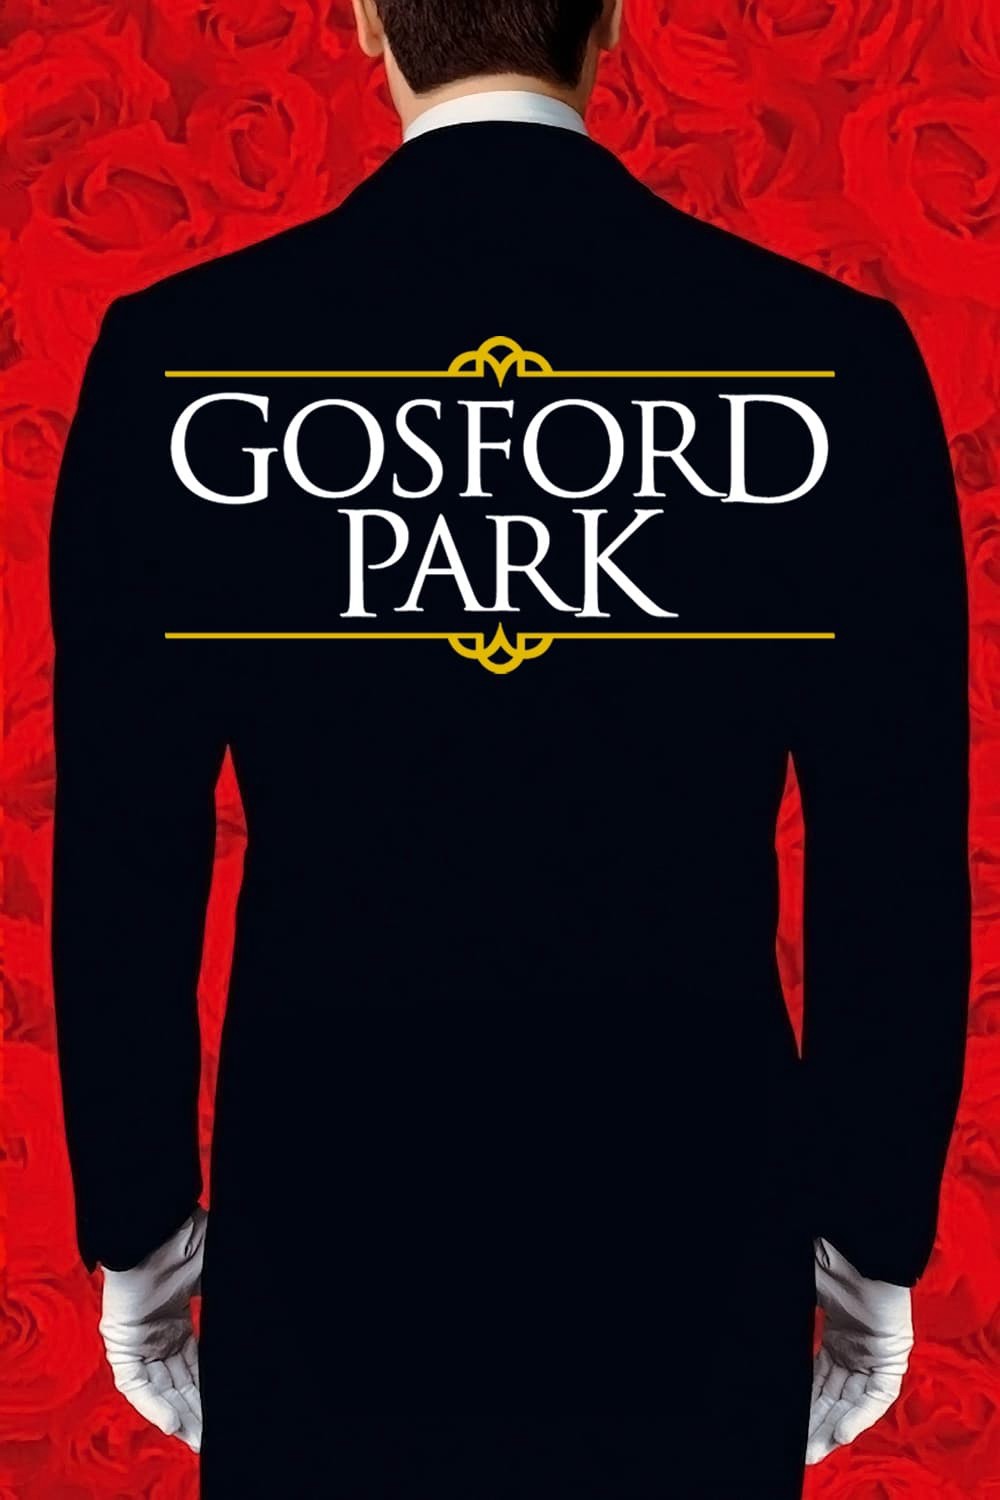 Gosford Park - Gosford Park (2001)